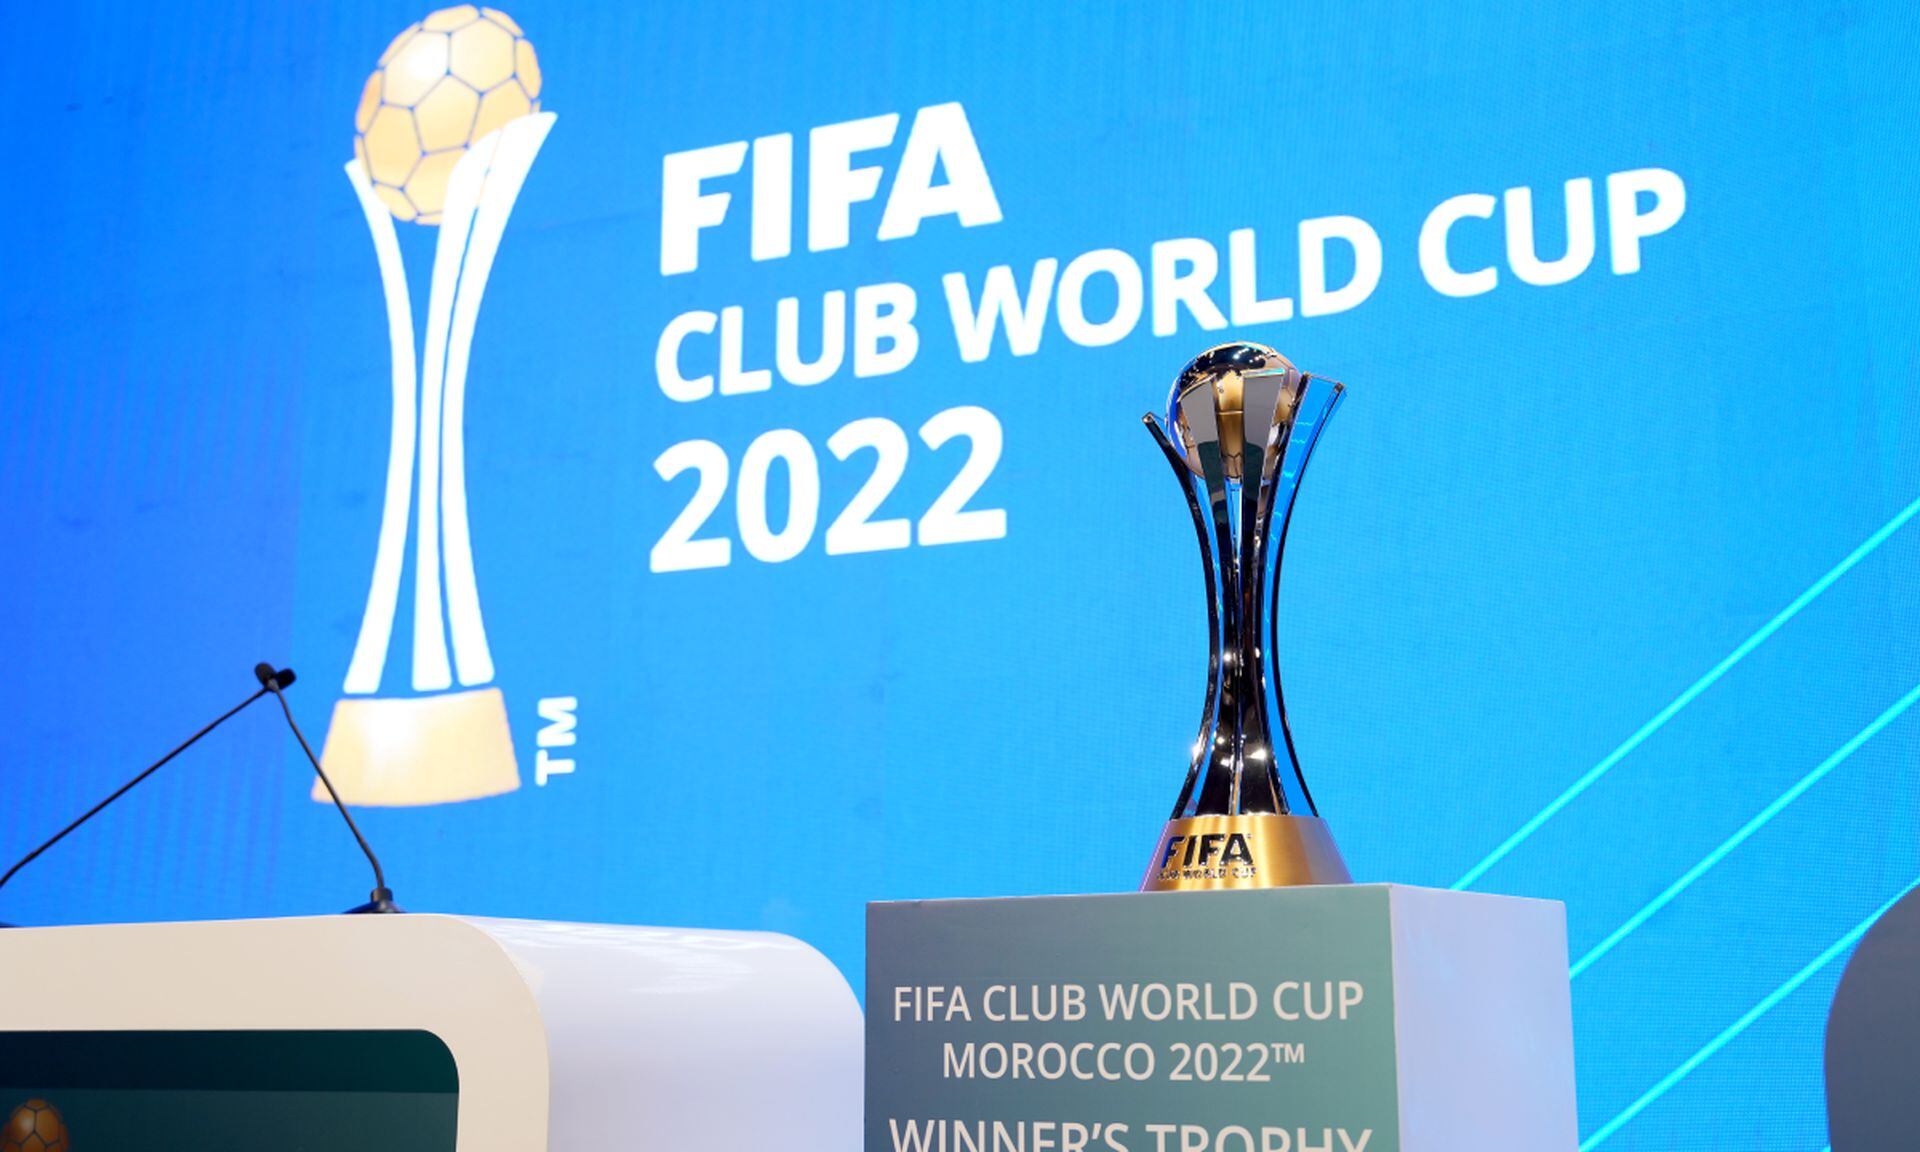 Real Madrid: El Mundial de Clubes, en Marruecos del 1 al 11 de febrero